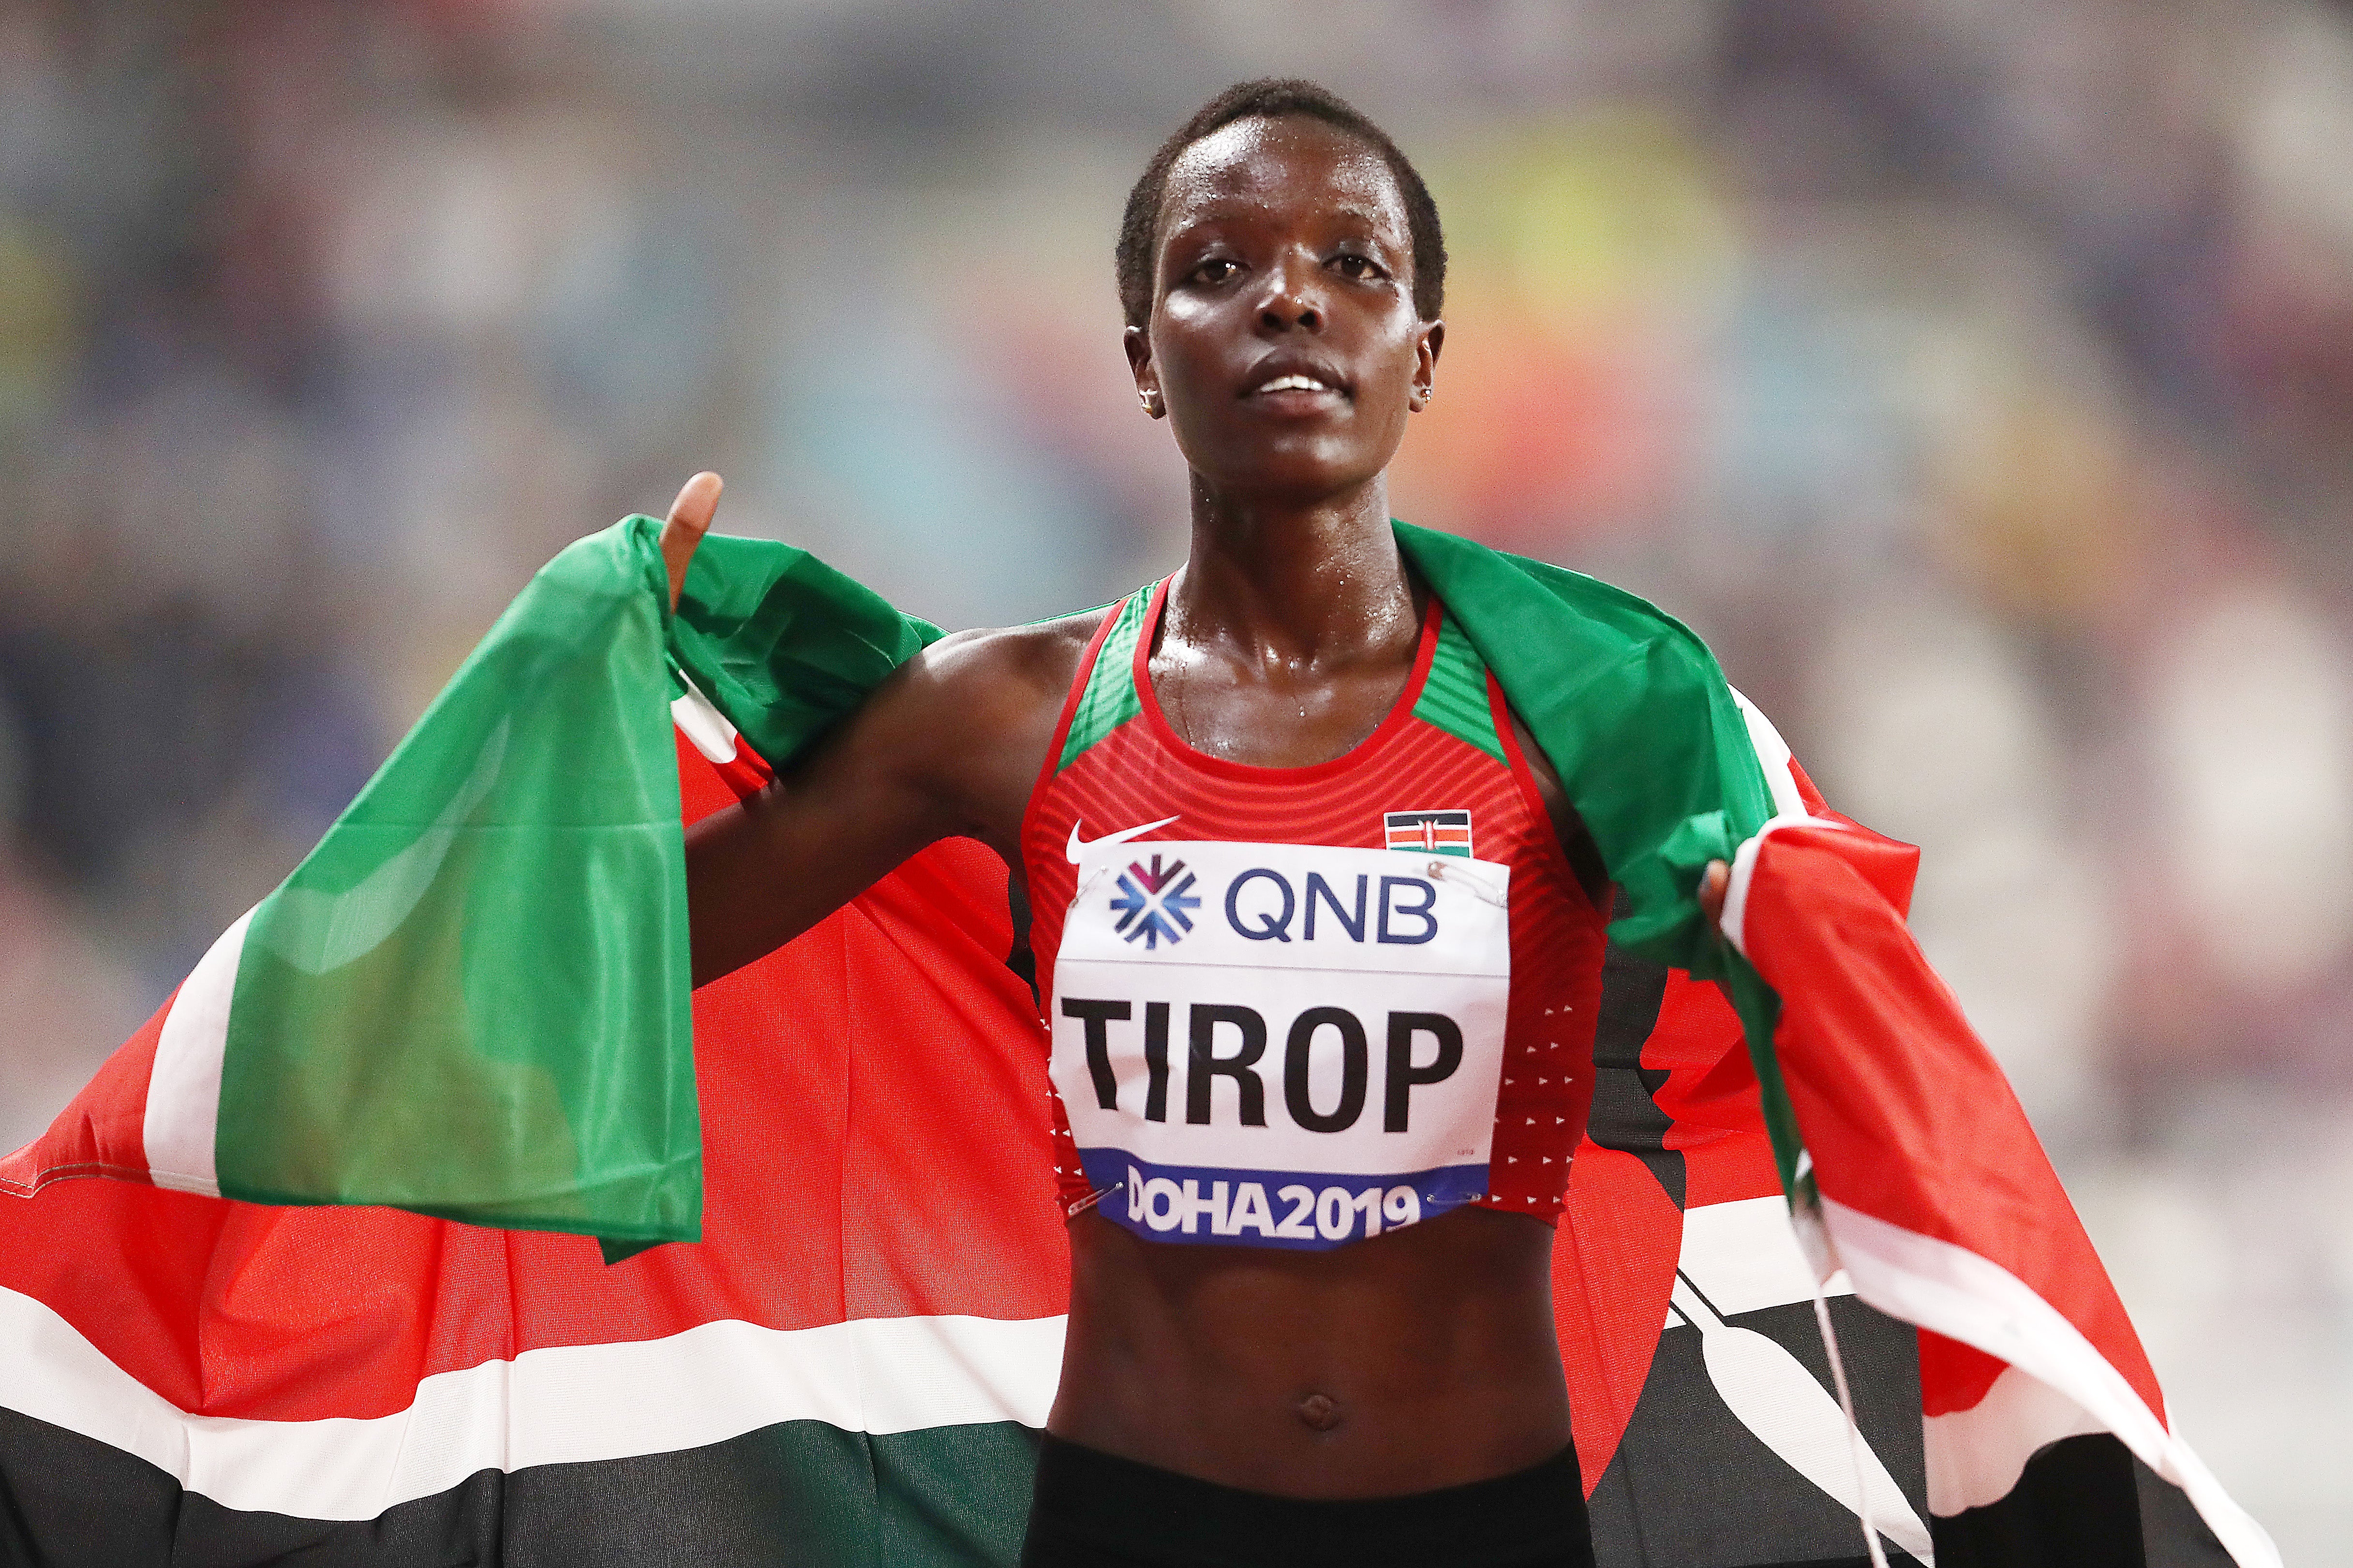 Tirop celebrates 10k bronze at the 2019 World Athletics Championships